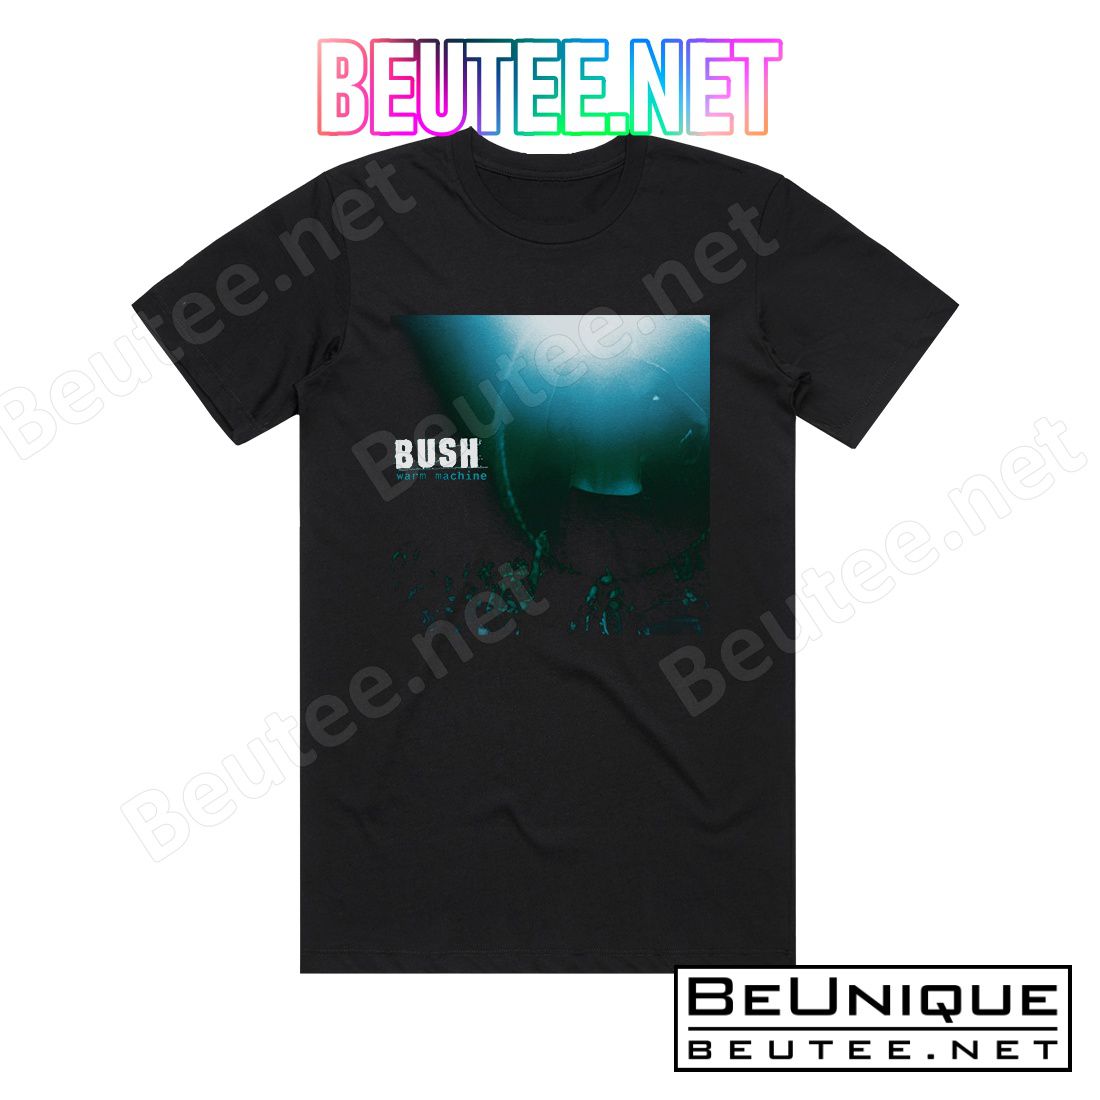 Bush Warm Machine Cds 2 Album Cover T-Shirt